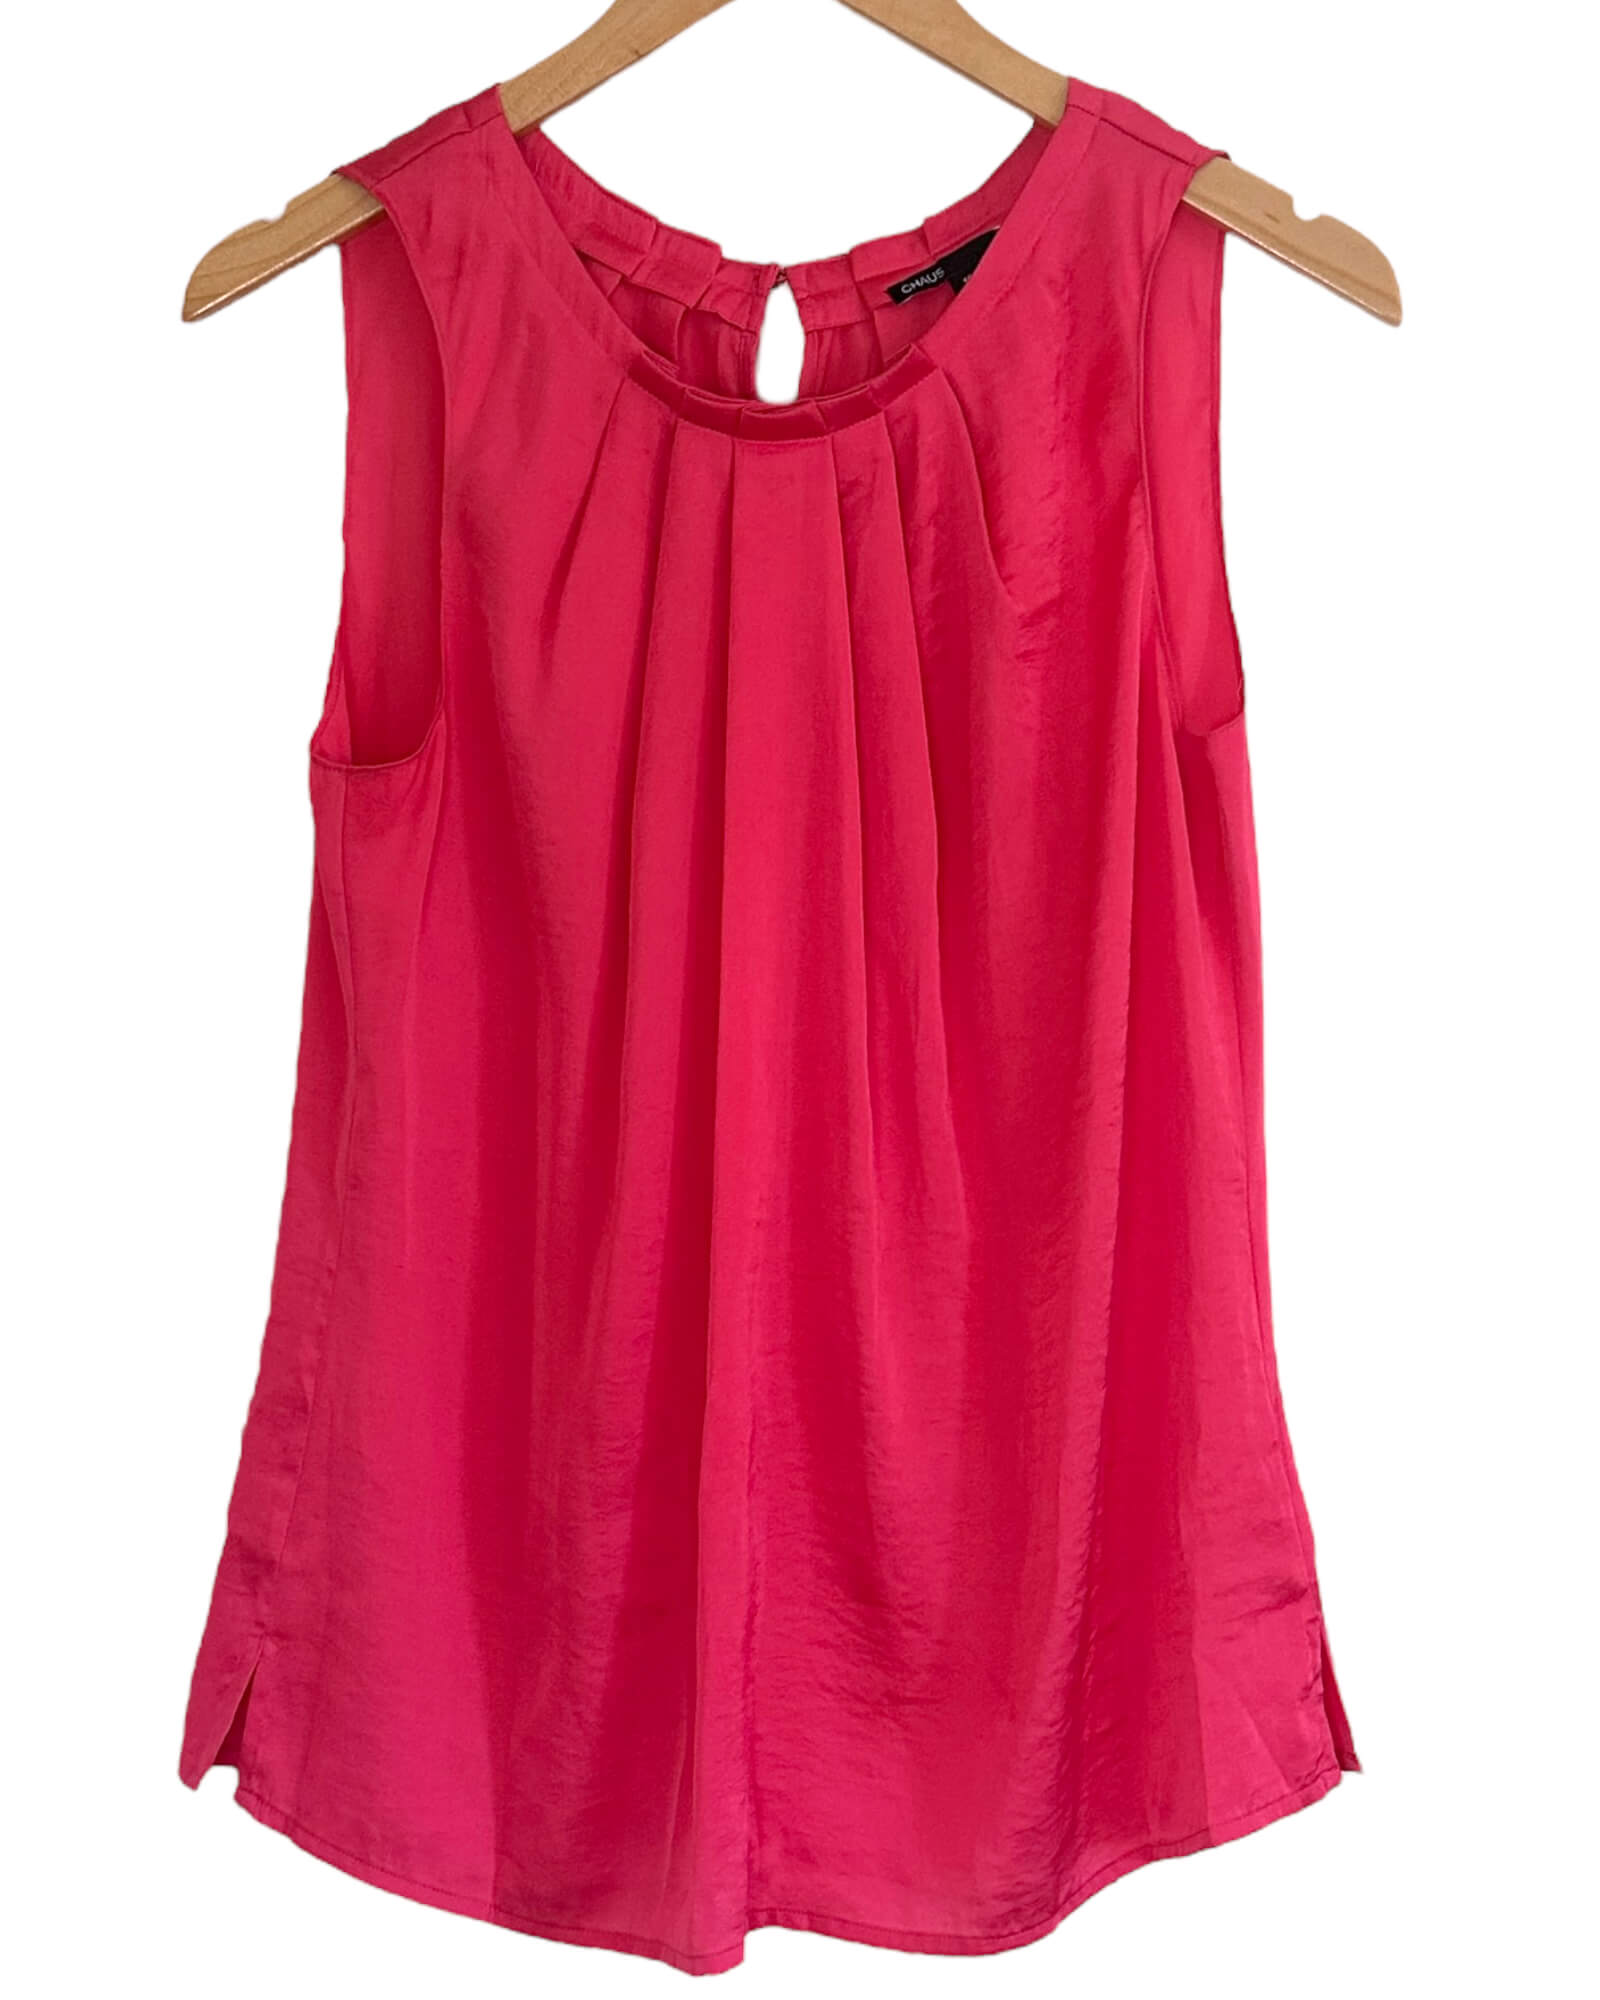 Light Summer CHAUS sleeveless pleated pink blouse top